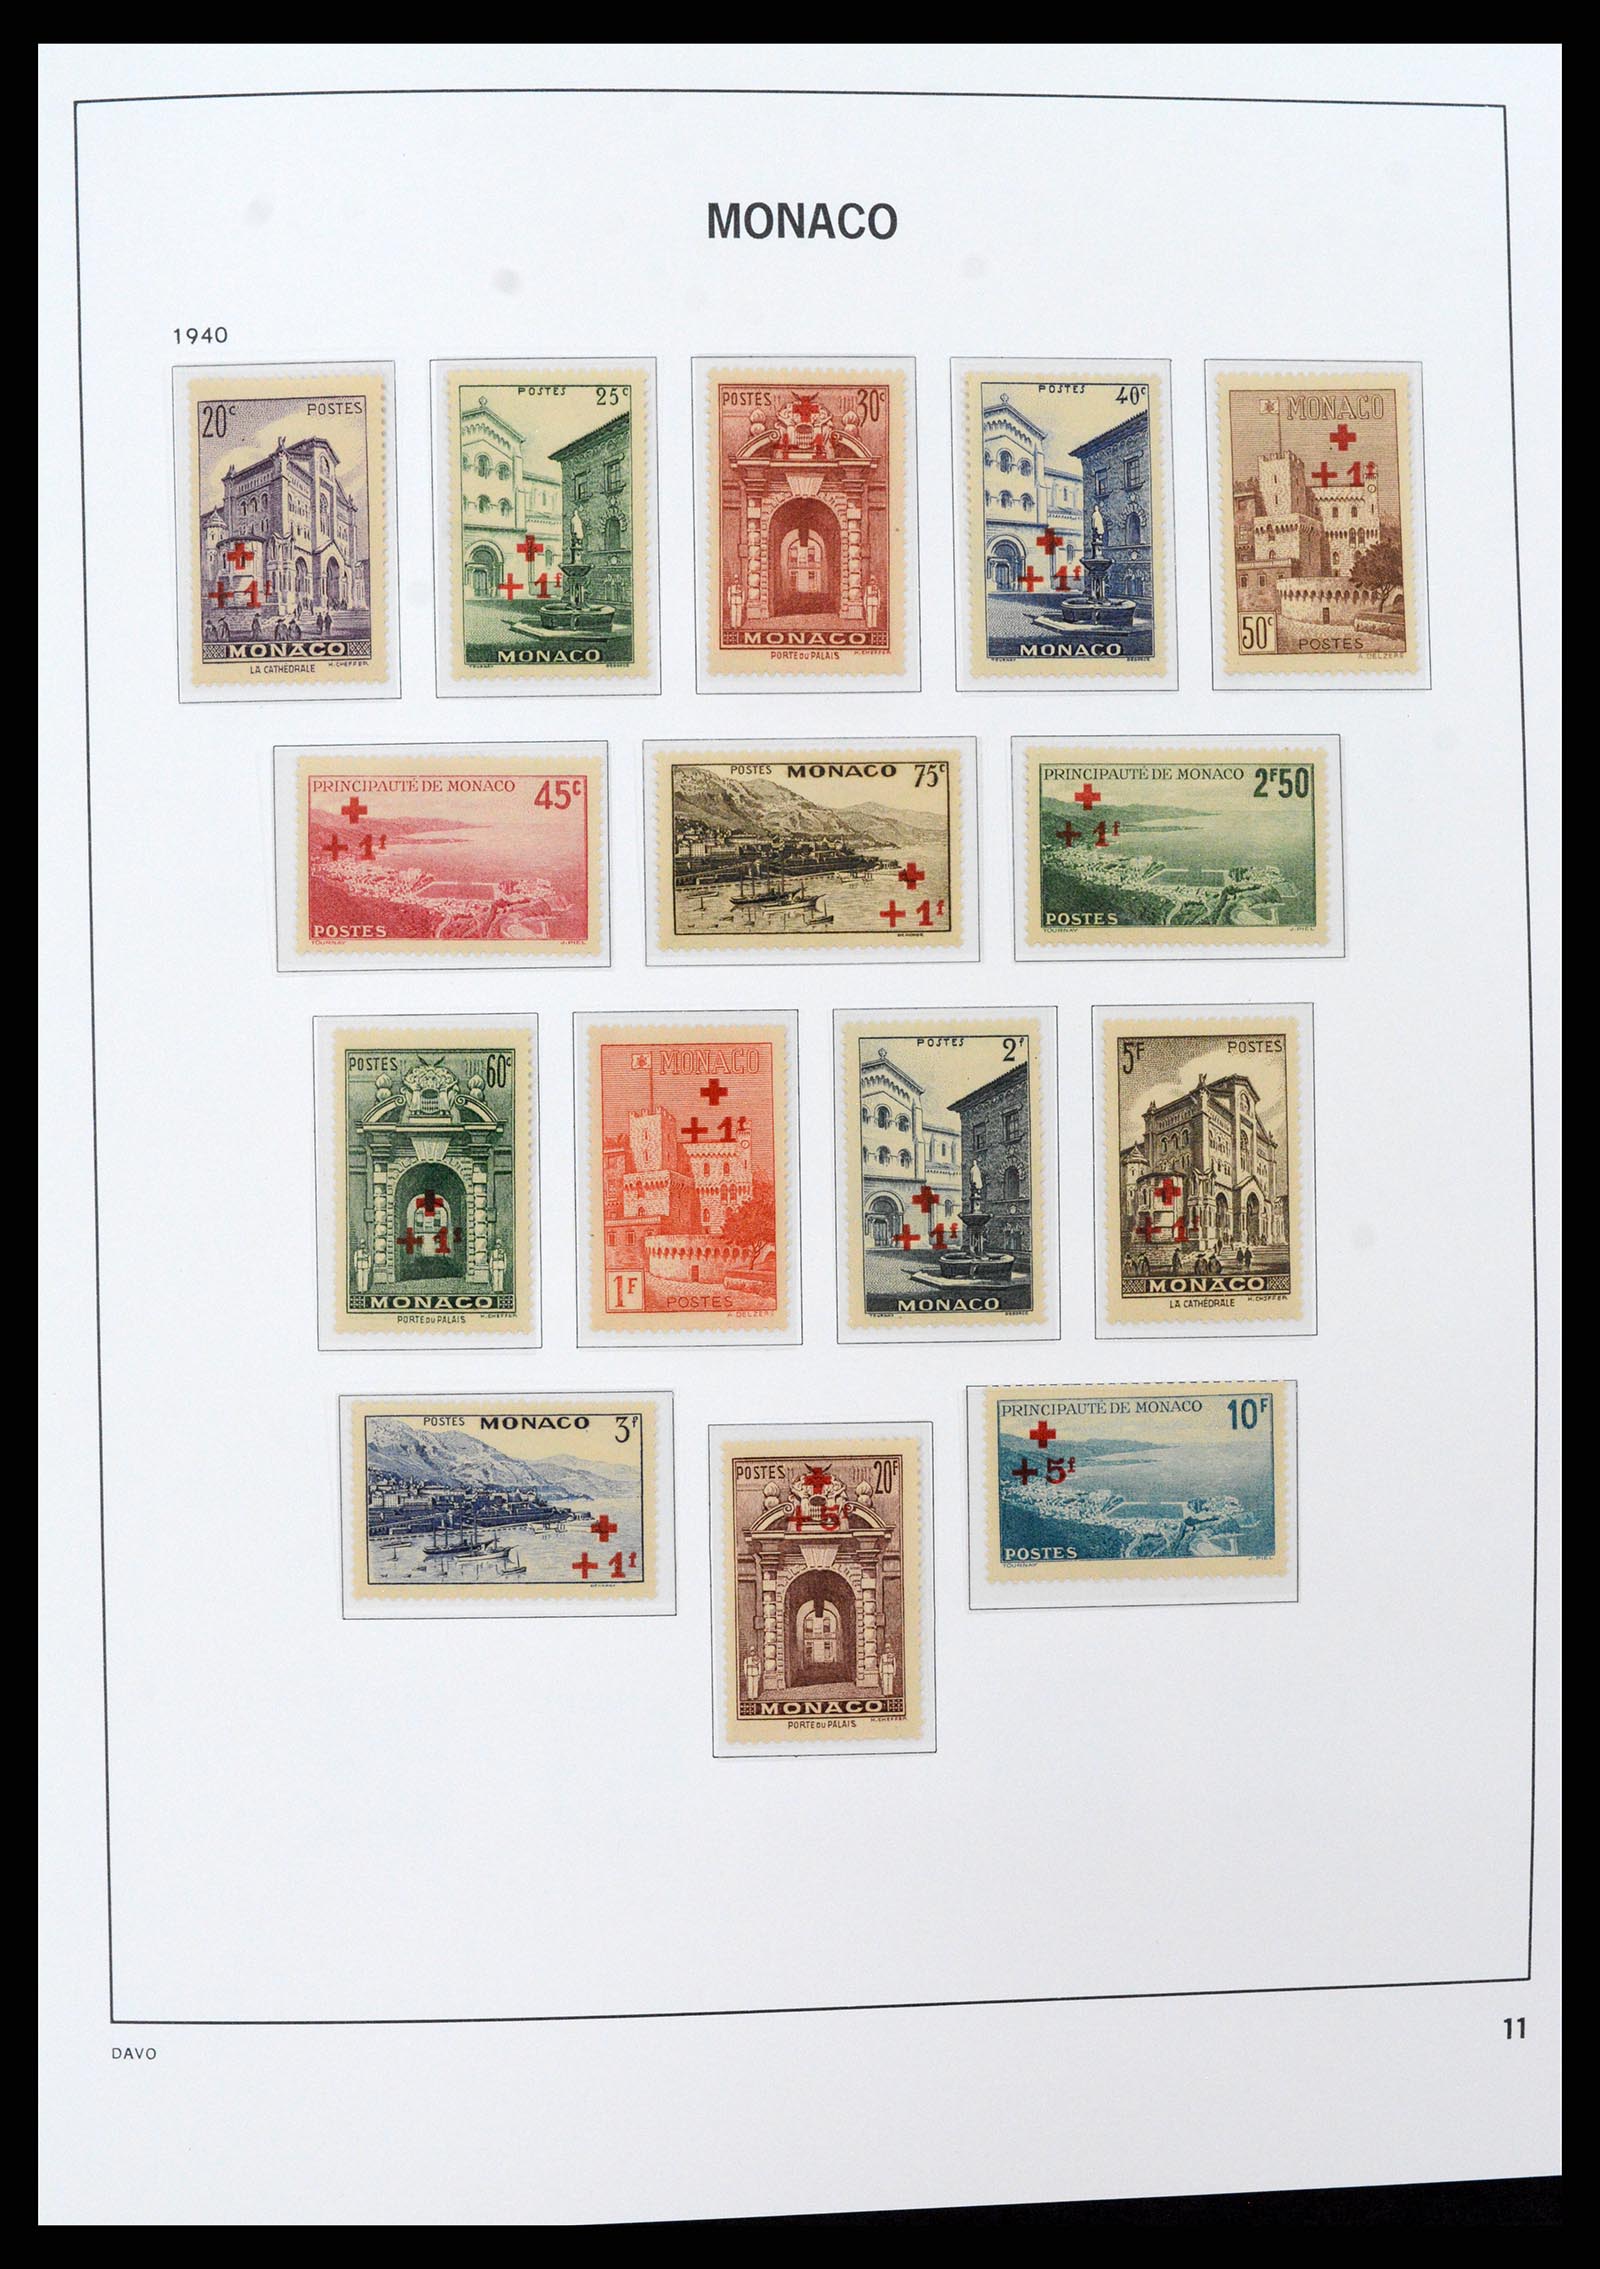 37279 011 - Stamp collection 37279 Monaco 1885-1969.